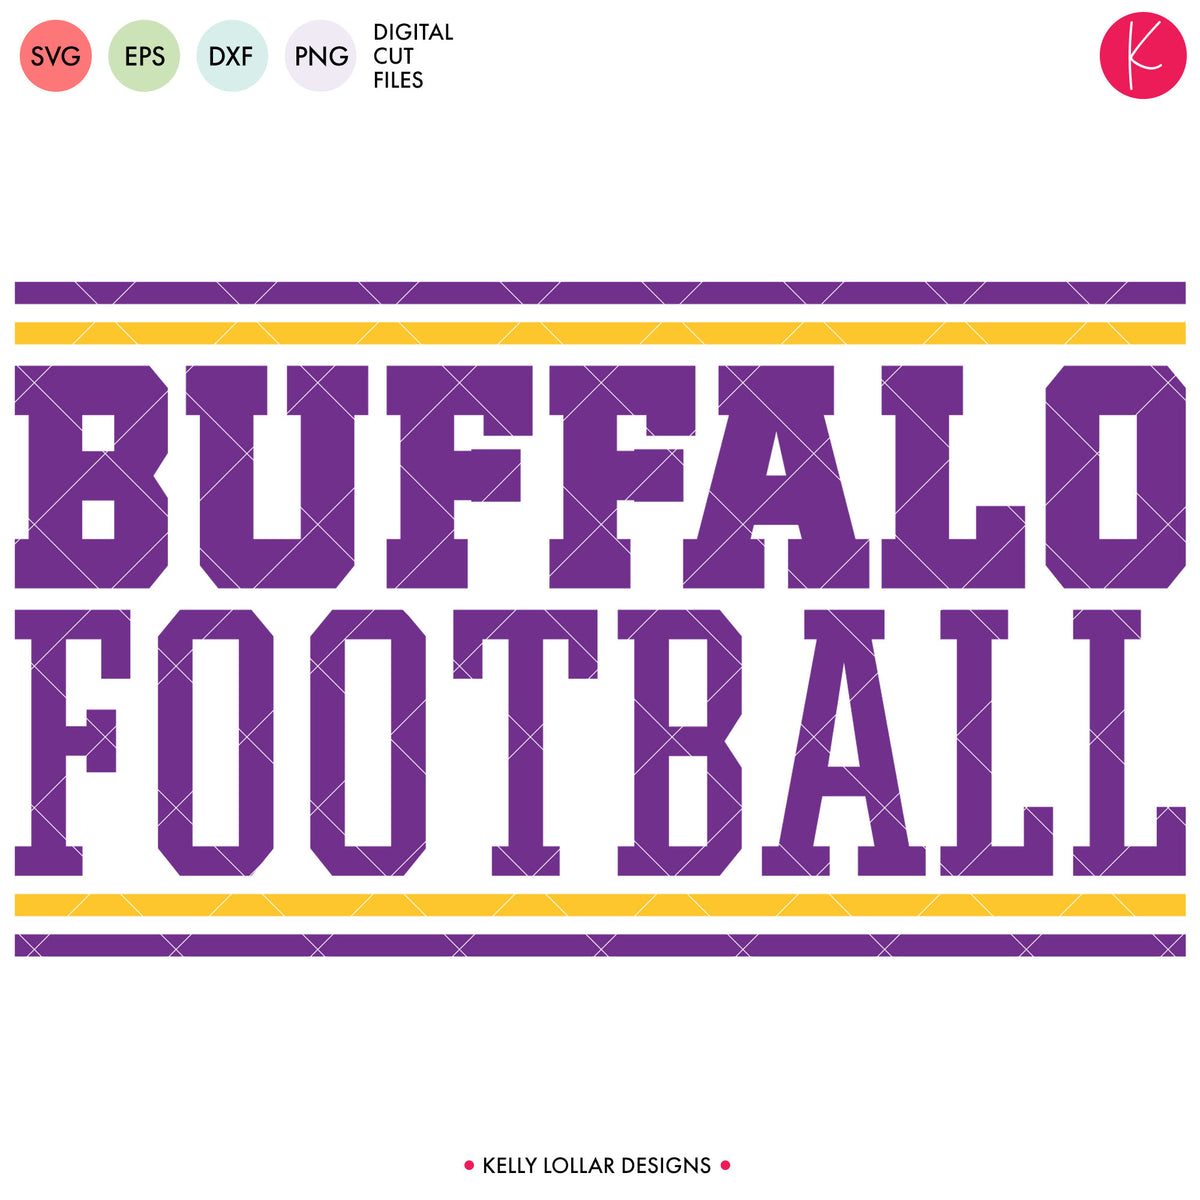 Buffaloes Football Bundle | SVG DXF EPS PNG Cut Files